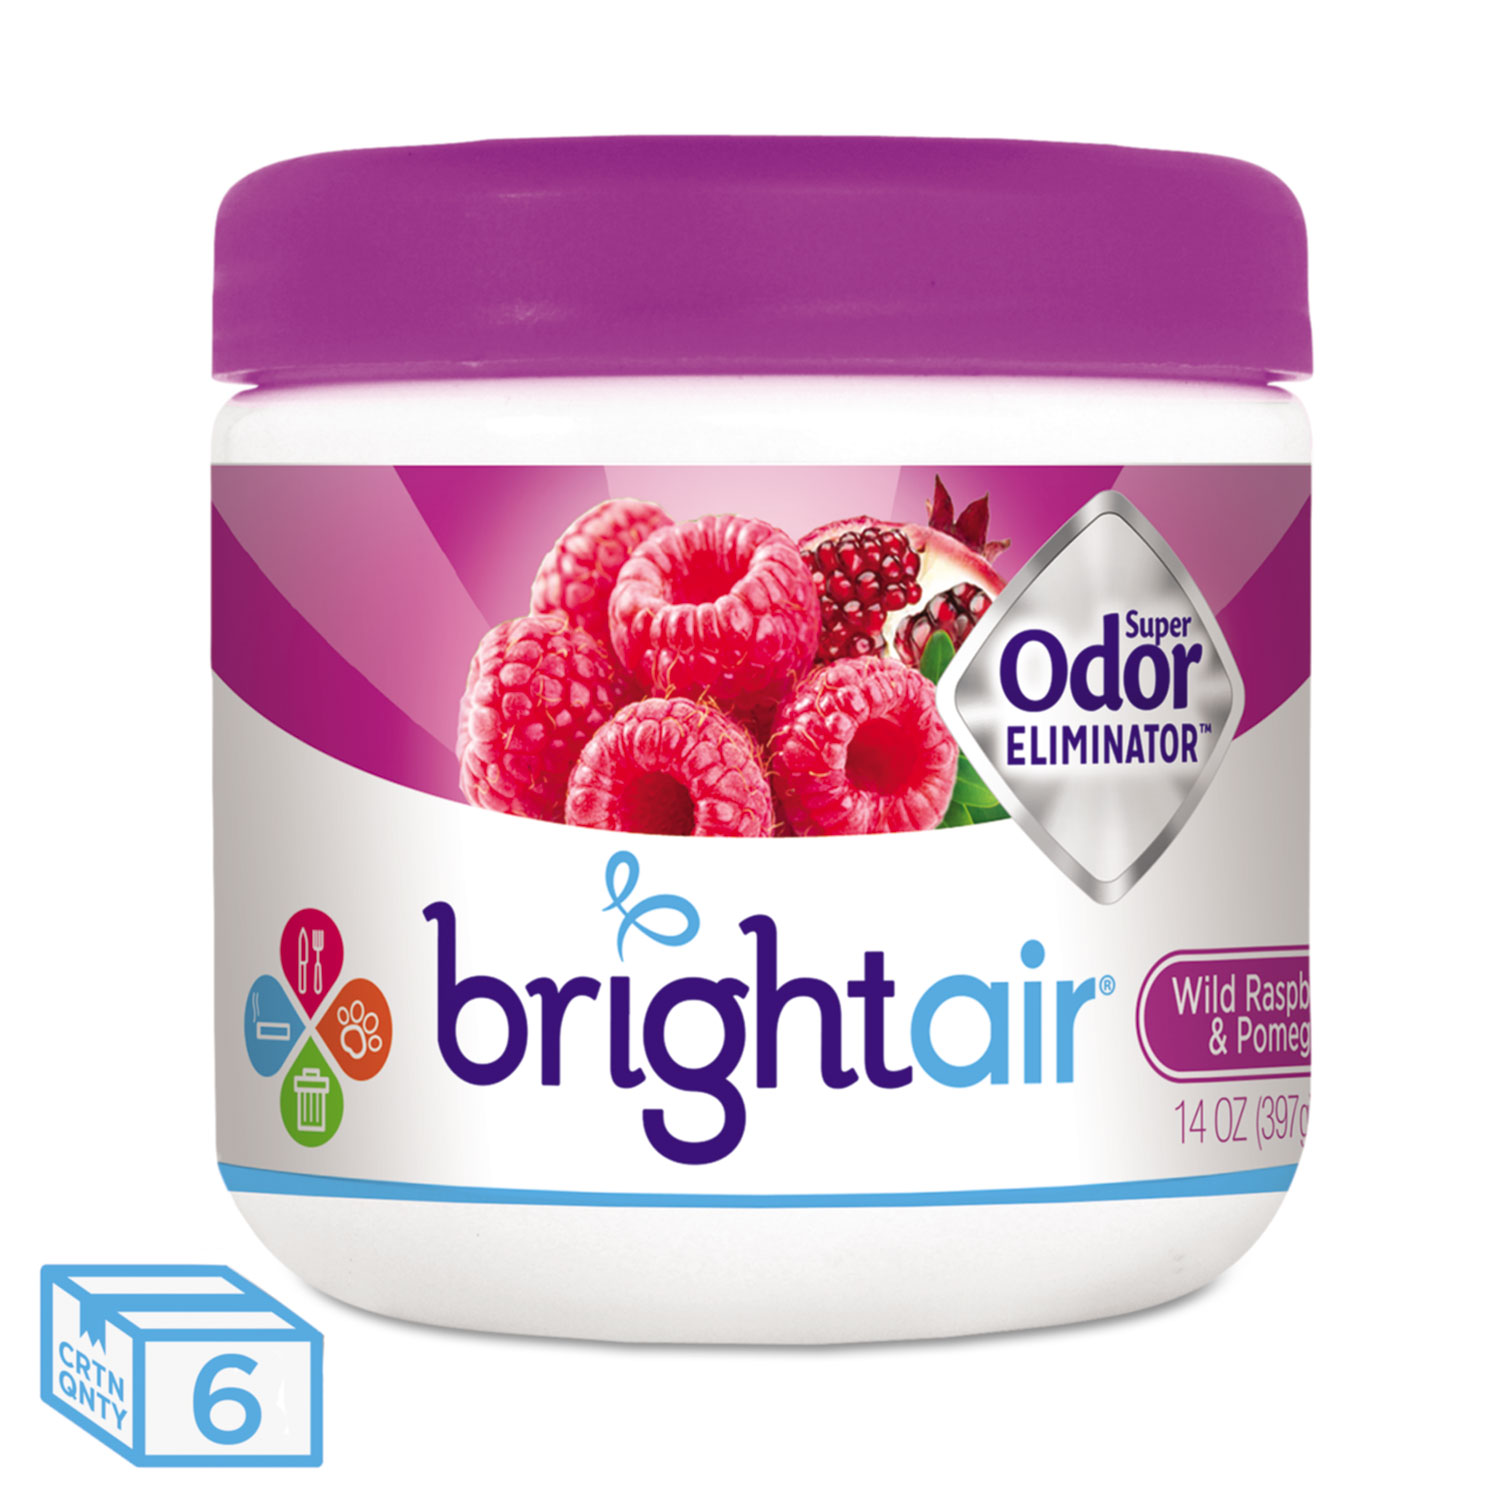  BRIGHT Air 900286CT Super Odor Eliminator, Wild Raspberry & Pomegranate, 14 oz Jar, 6/Carton (BRI900286CT) 